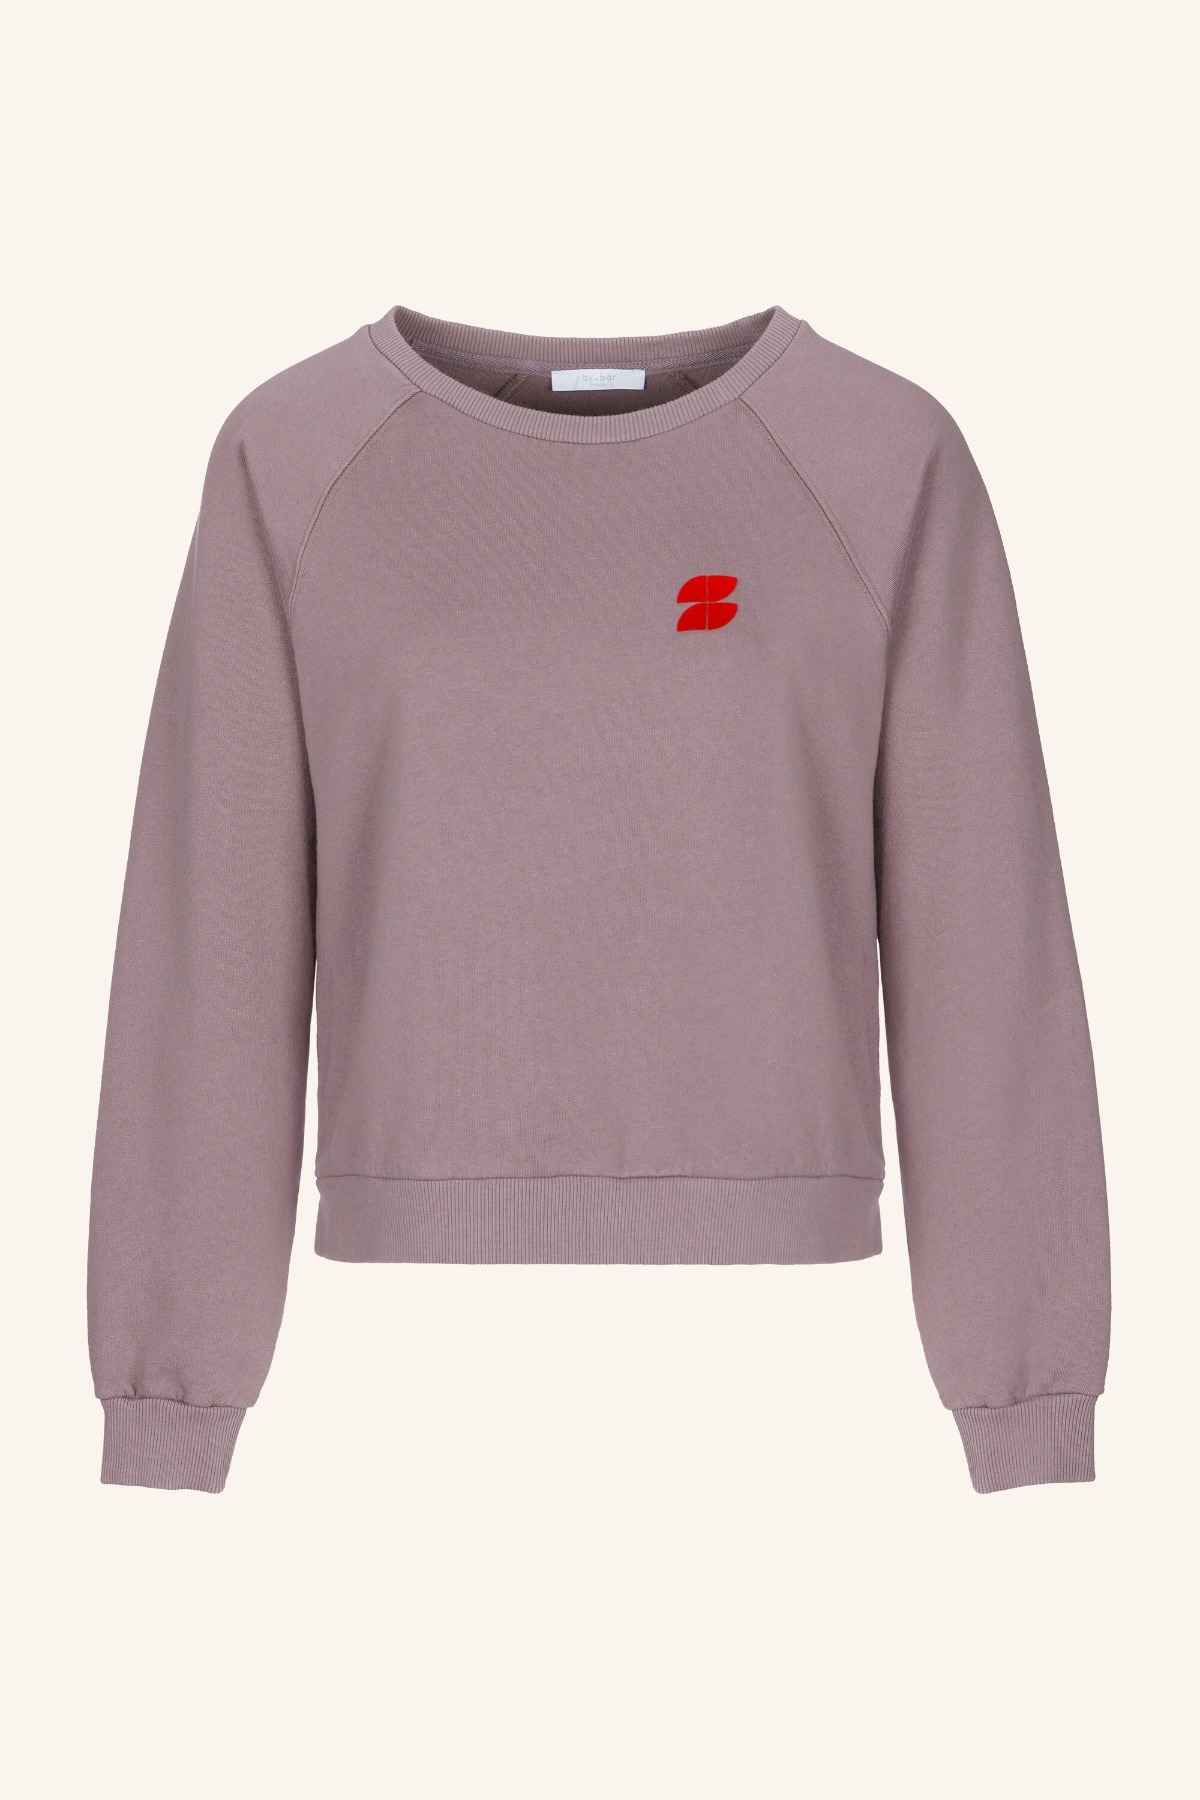 by-bar amsterdam - fenne sweater - dark lavender 5